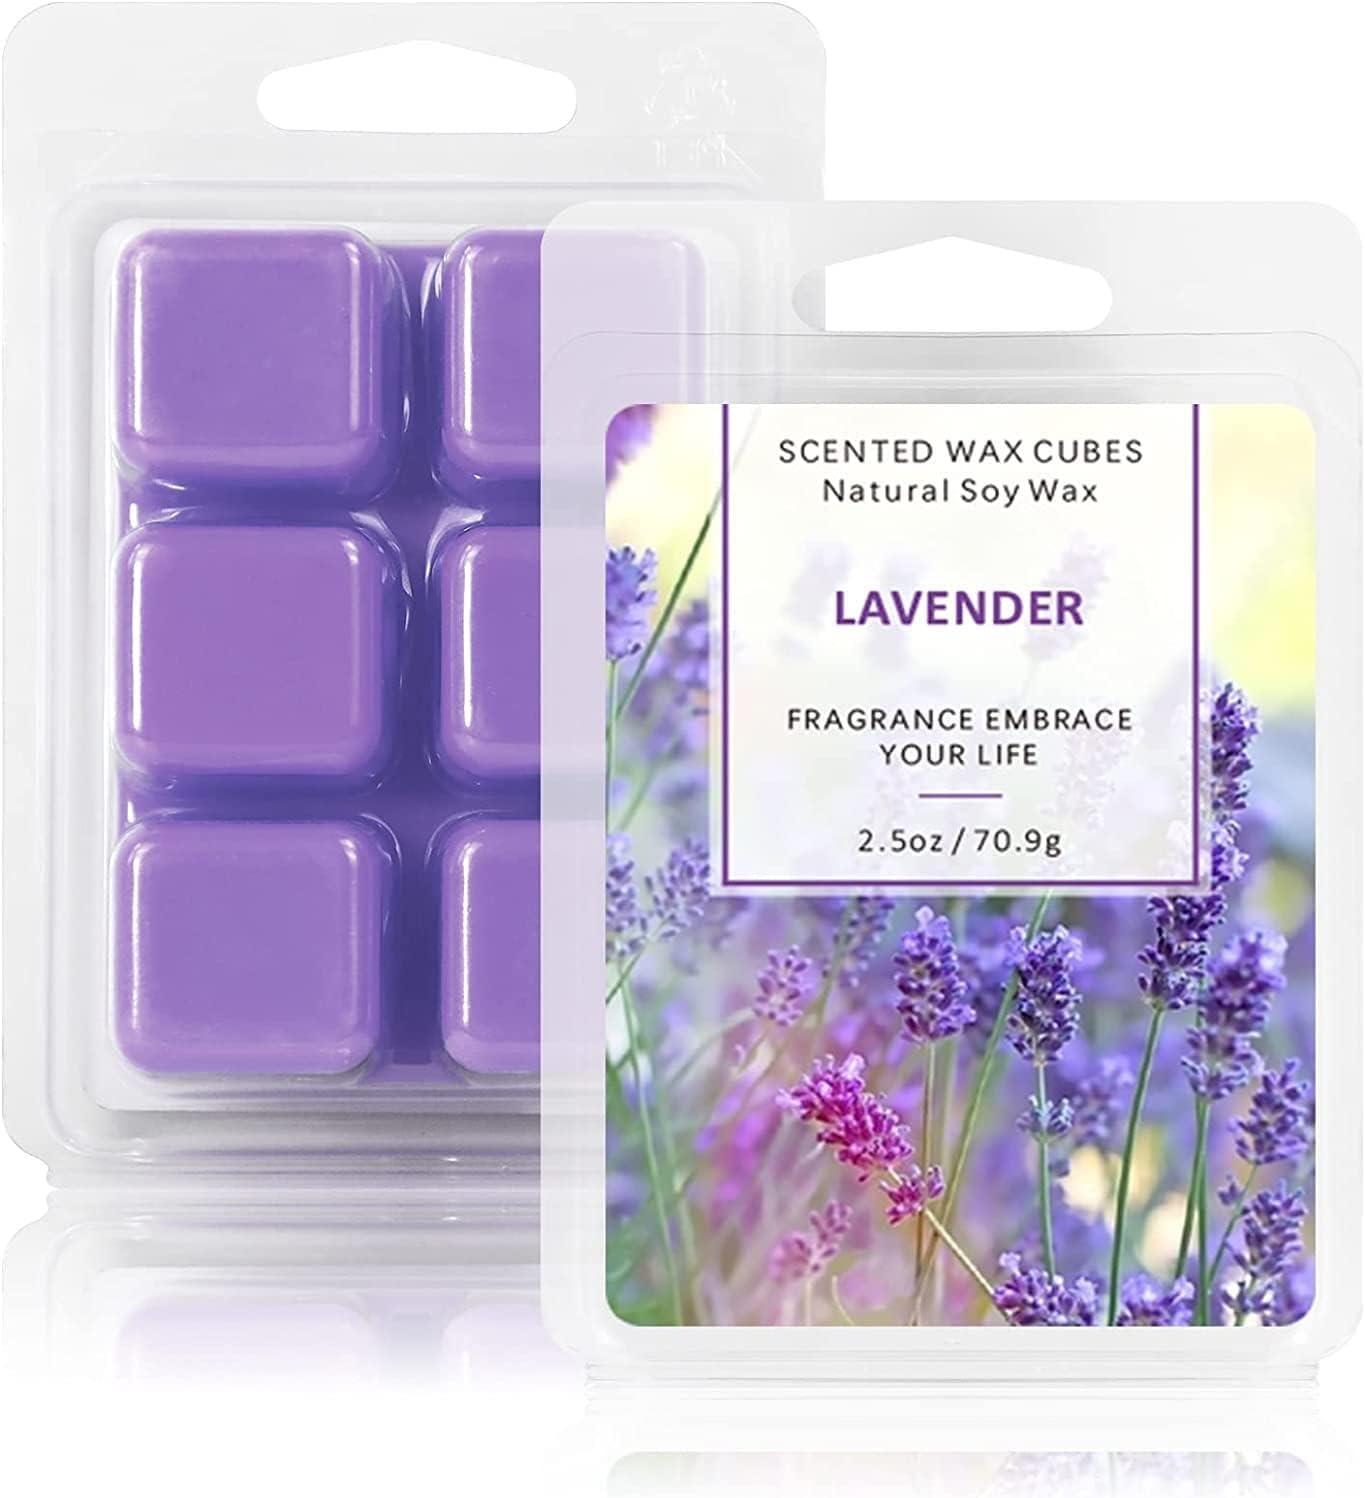 LA BELLEFE Wax Melts Wax Cubes, Lavender Scented Wax Melts for